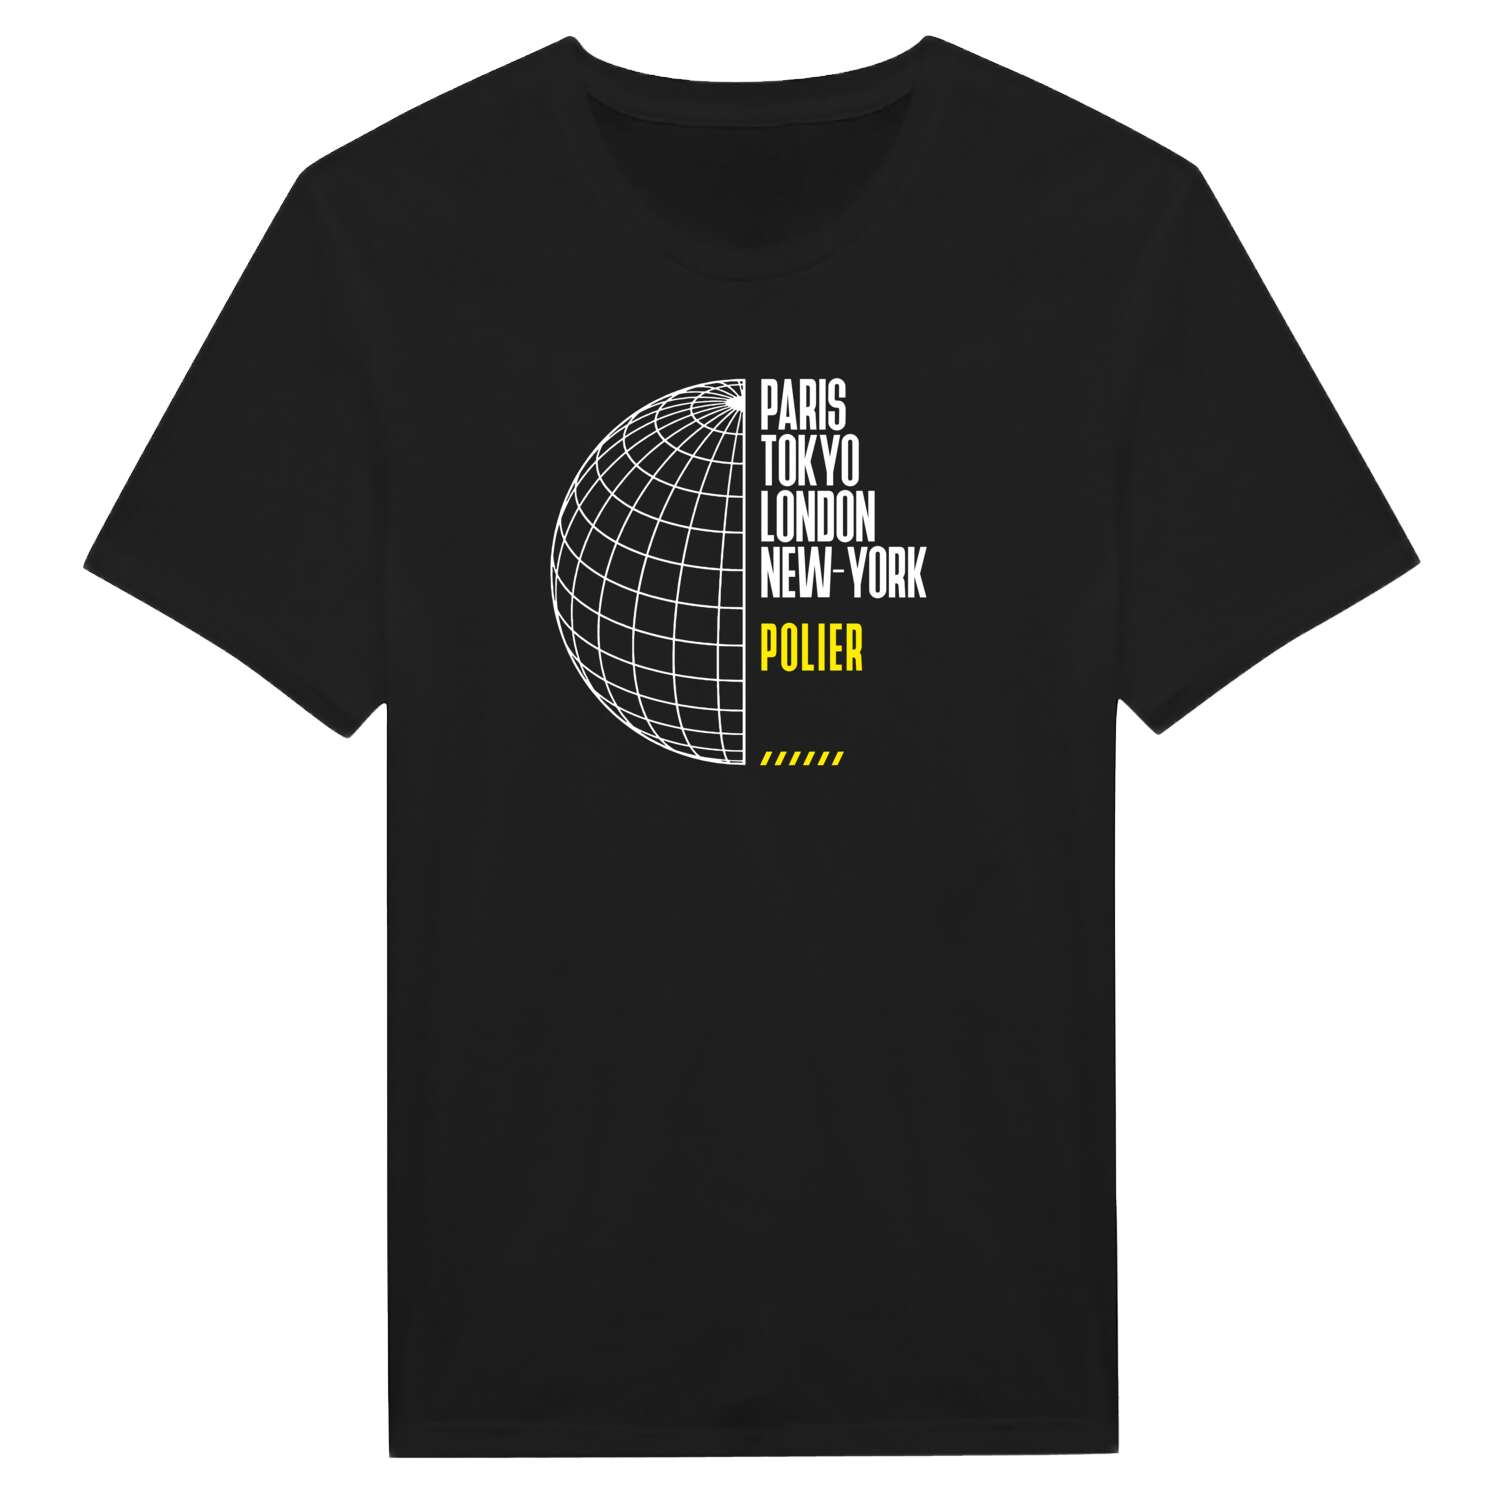 Polier T-Shirt »Paris Tokyo London«